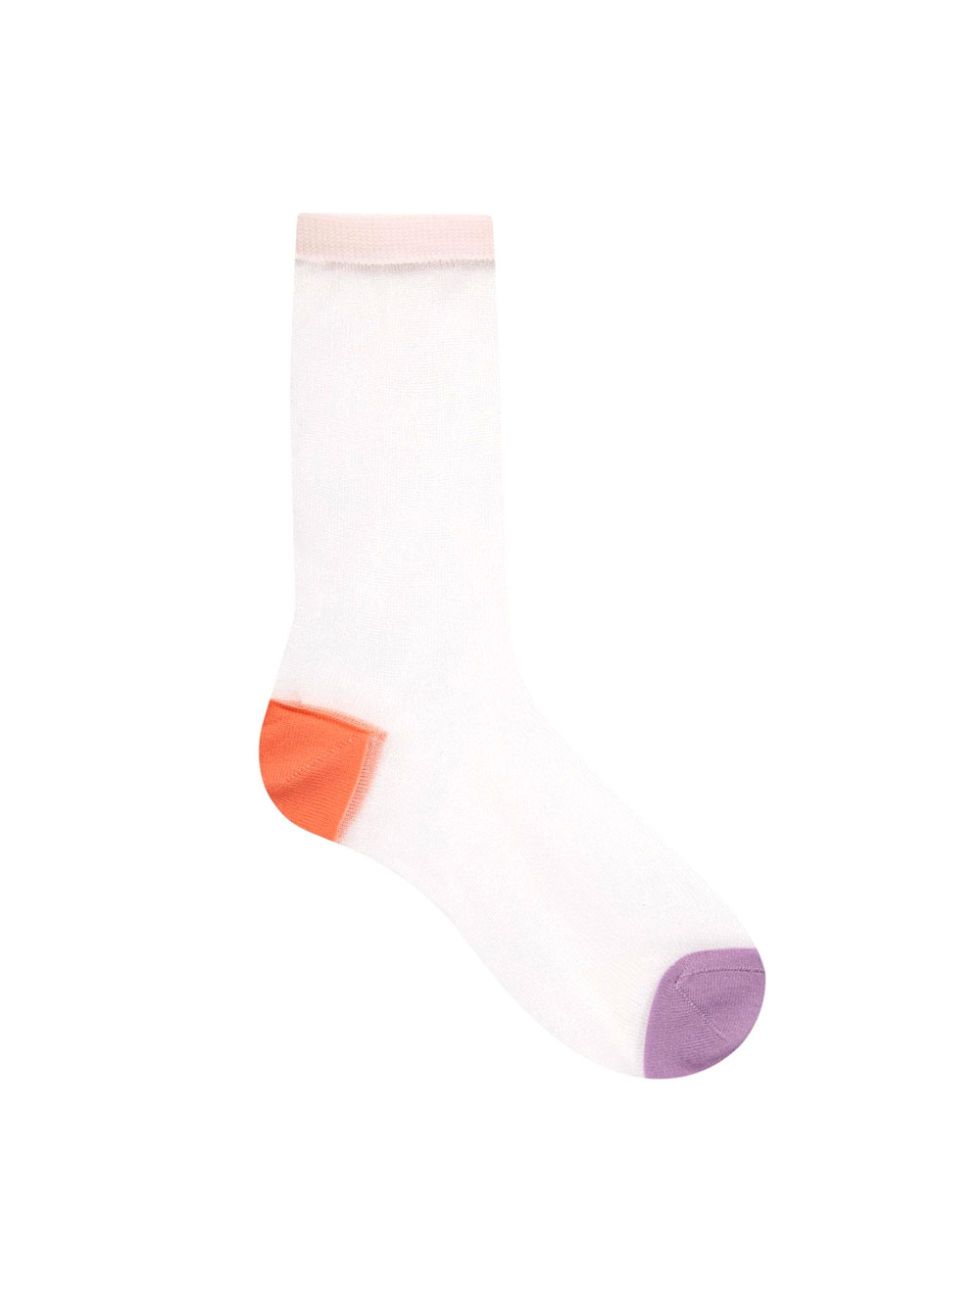 Sock, Boot, Peach, Plastic, Foot, 